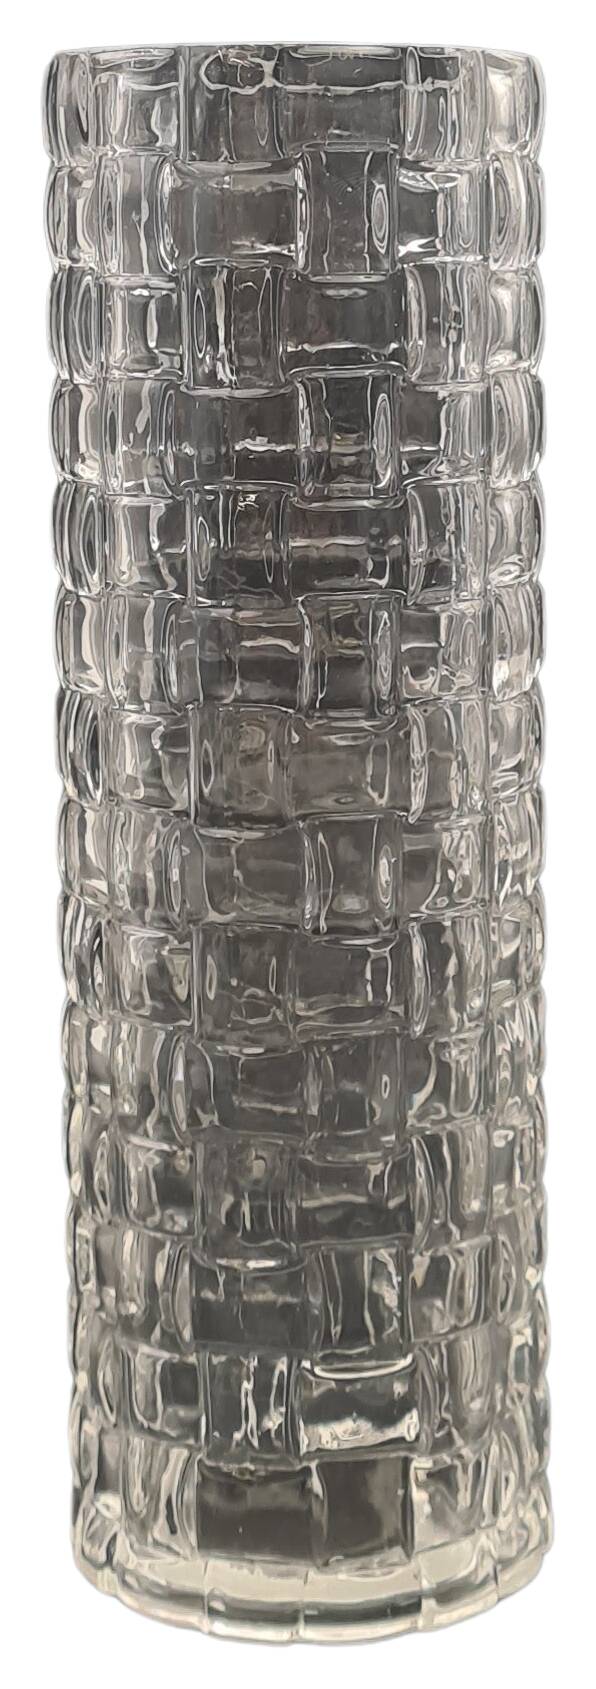 Decorative glass "Stockholm" - 70x212mm - clear